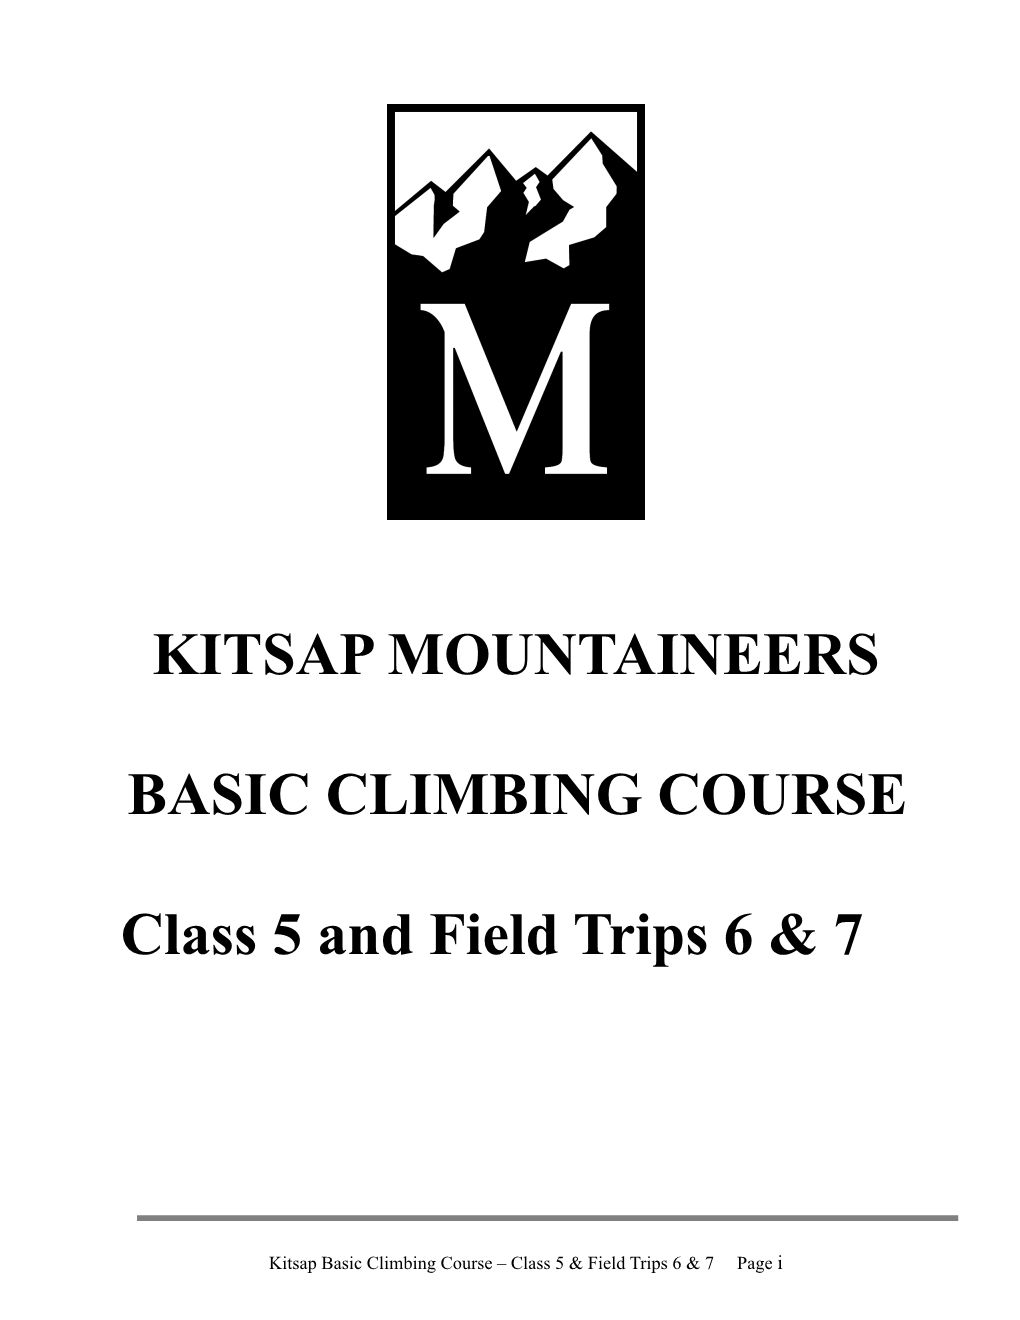 2019 Kitsap Basic Climbing